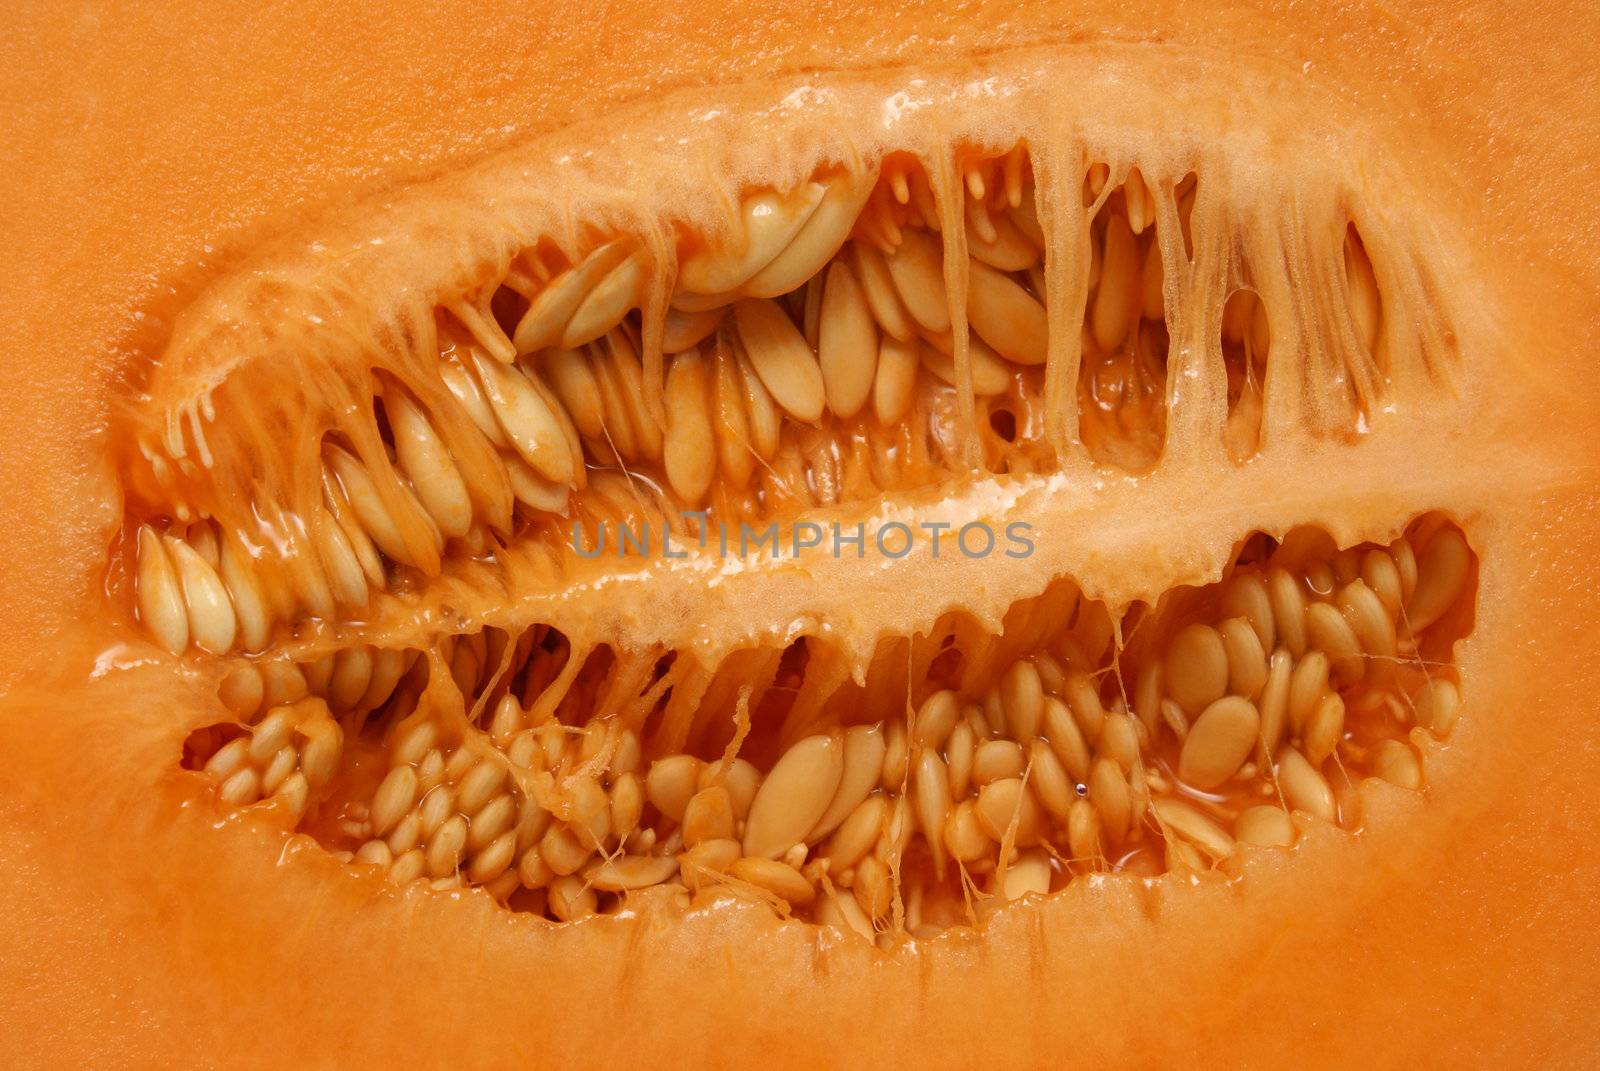 The inside of a frshly cut cantaloupe.